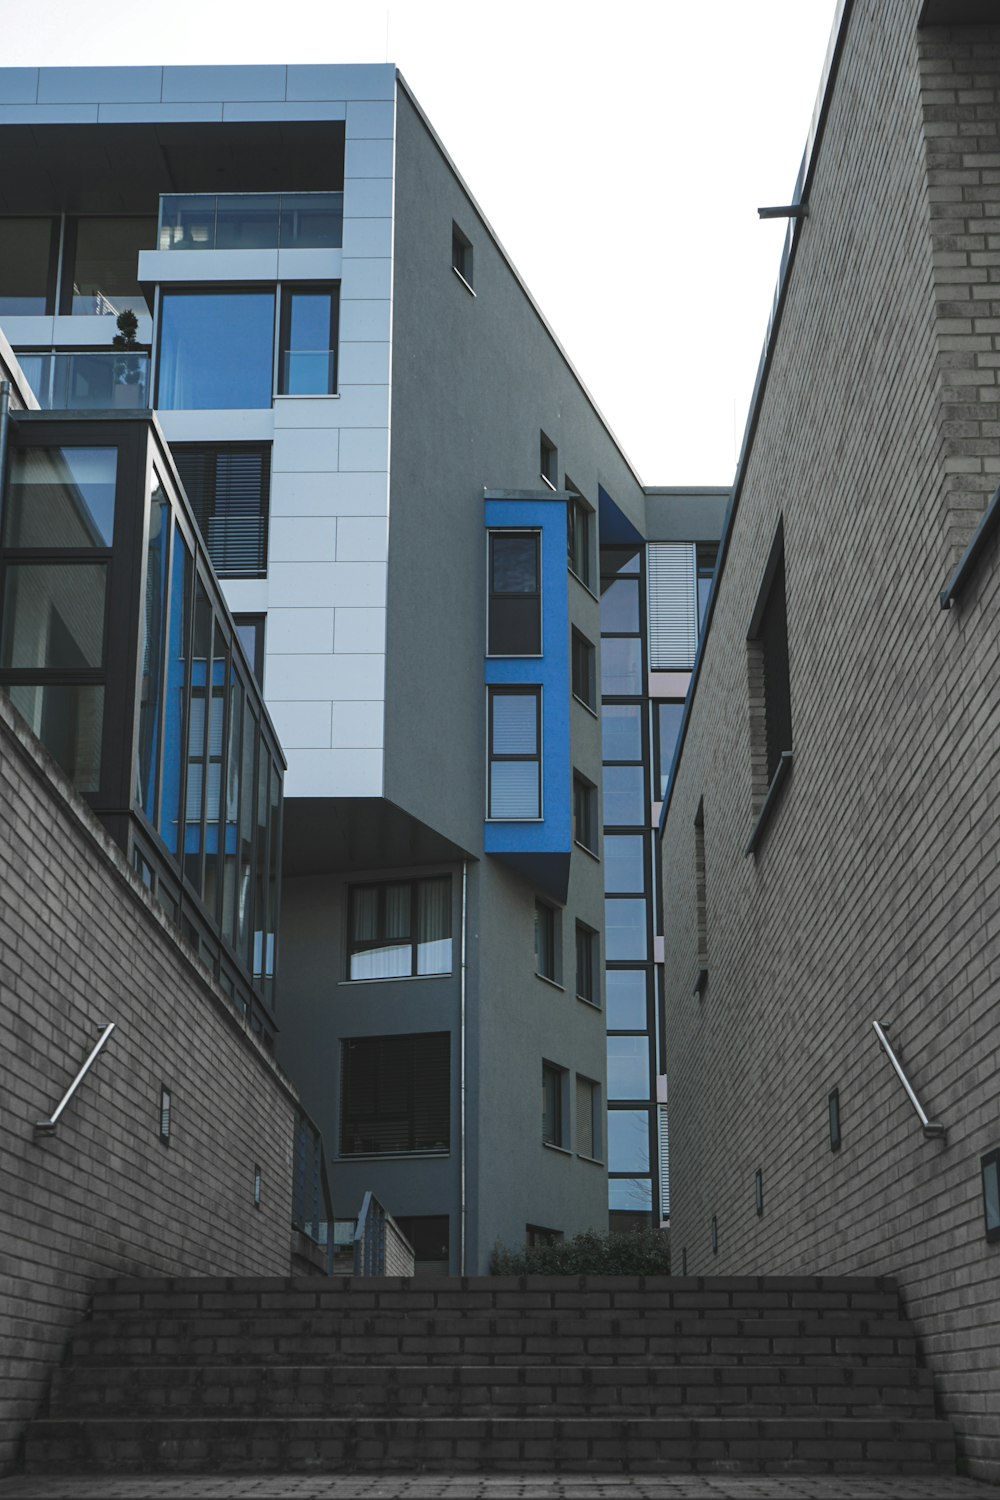 Edificio de hormigón gris con ventanas azules